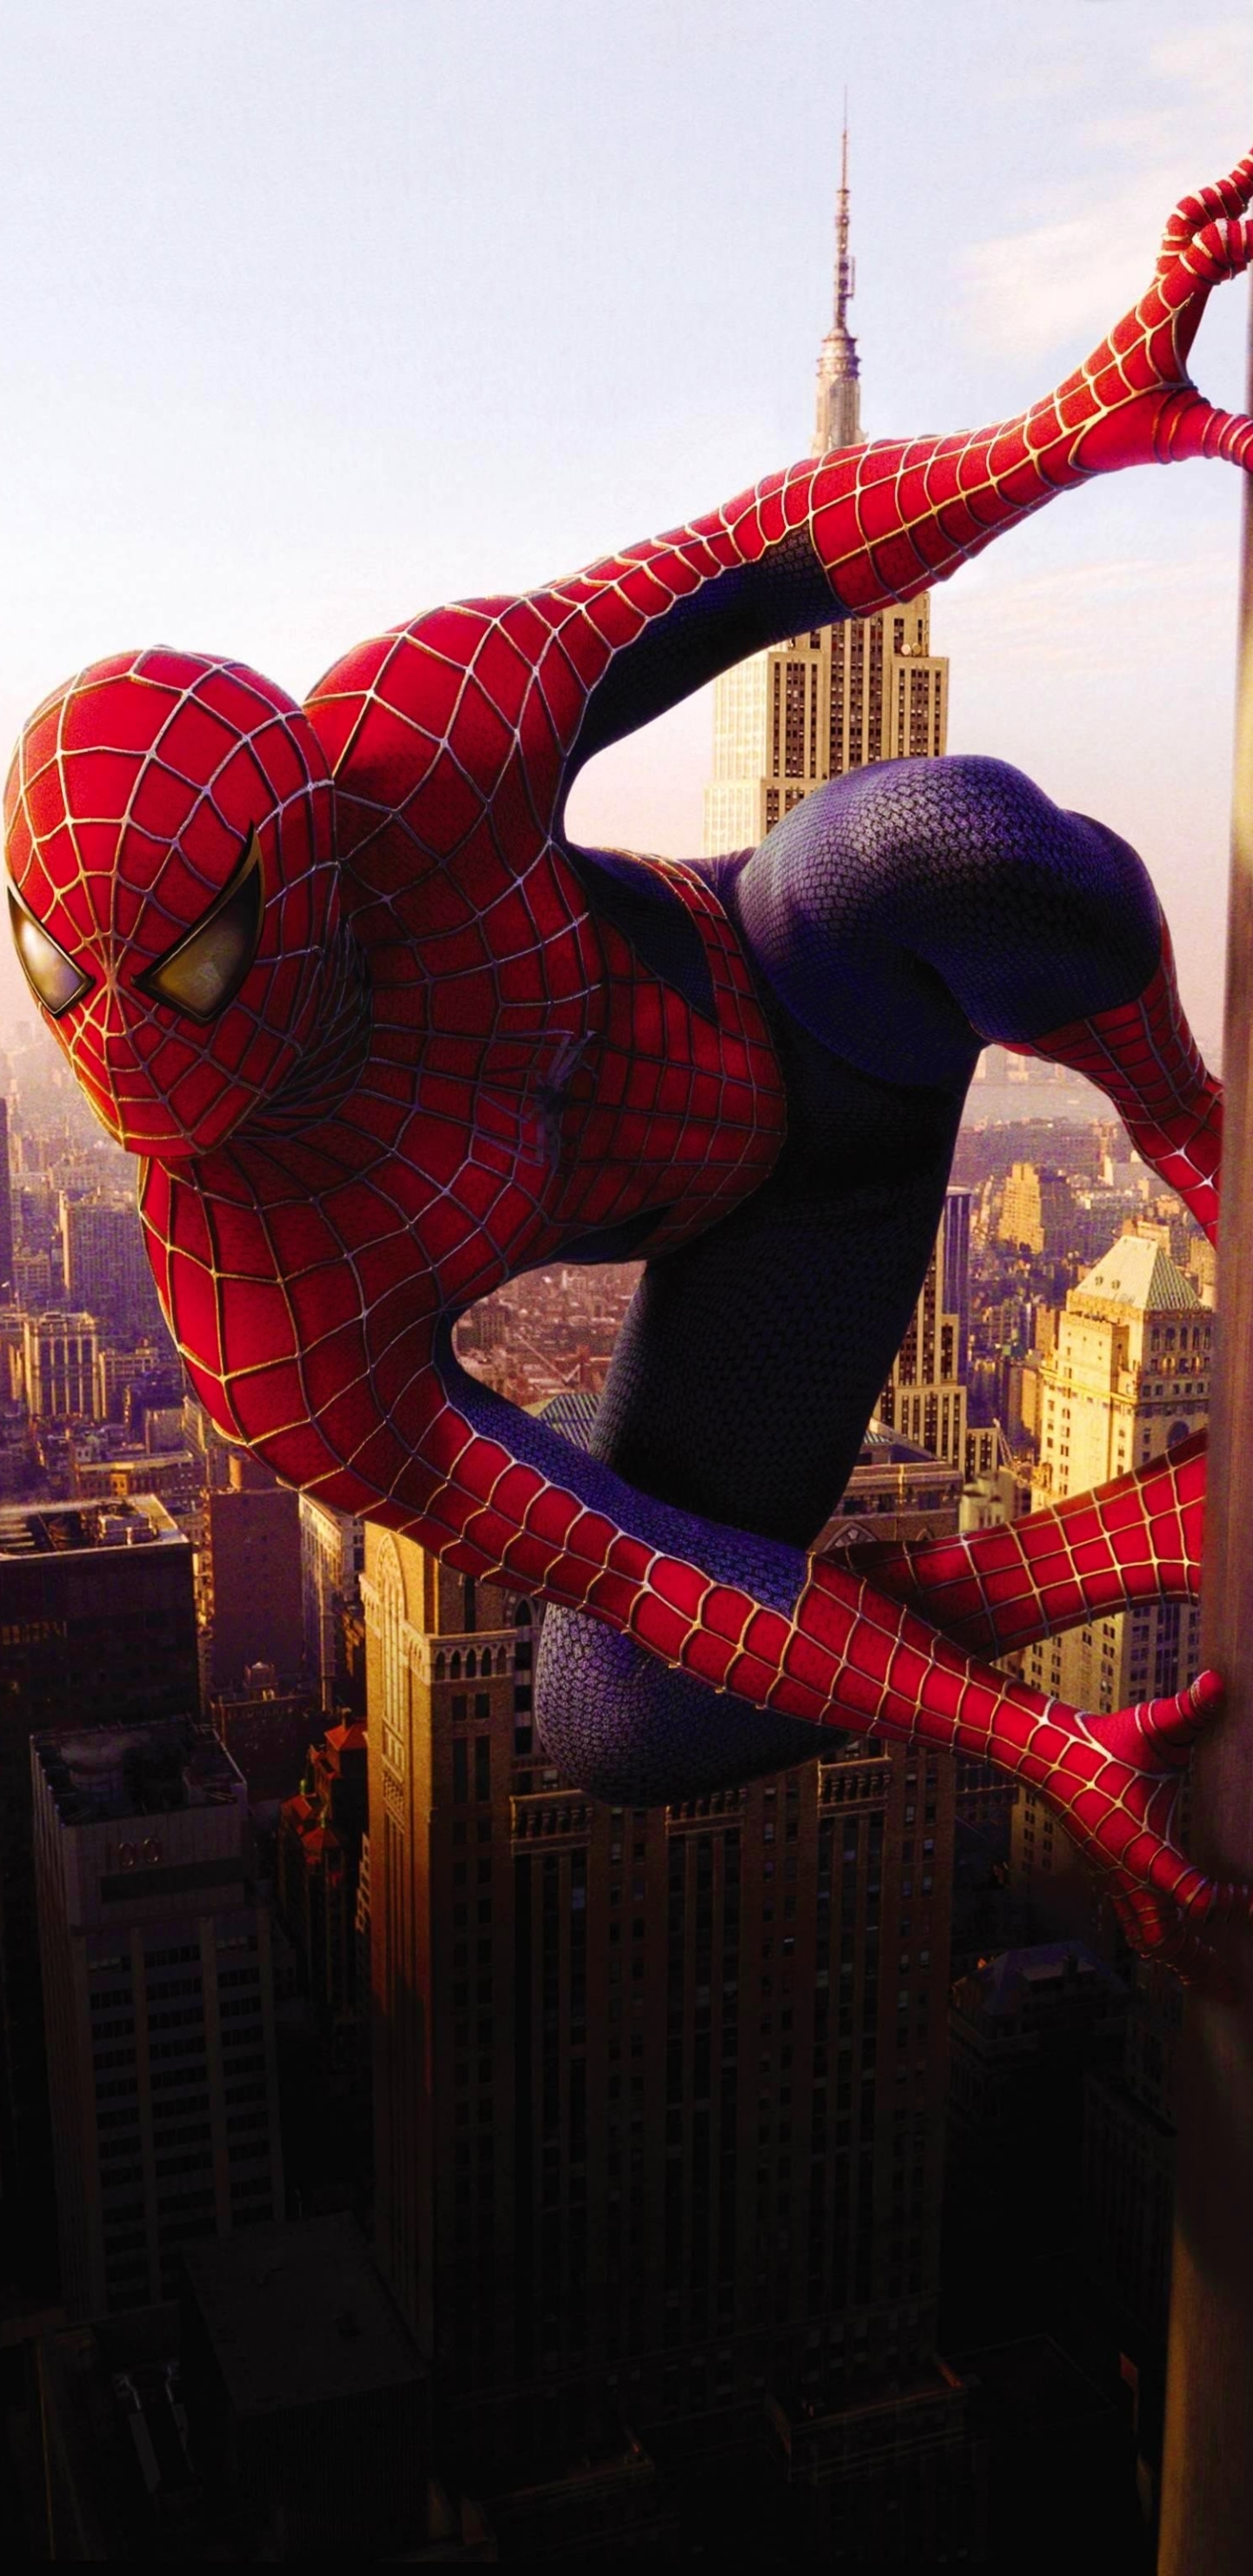 Descarga gratuita de fondo de pantalla para móvil de Películas, Spider Man.